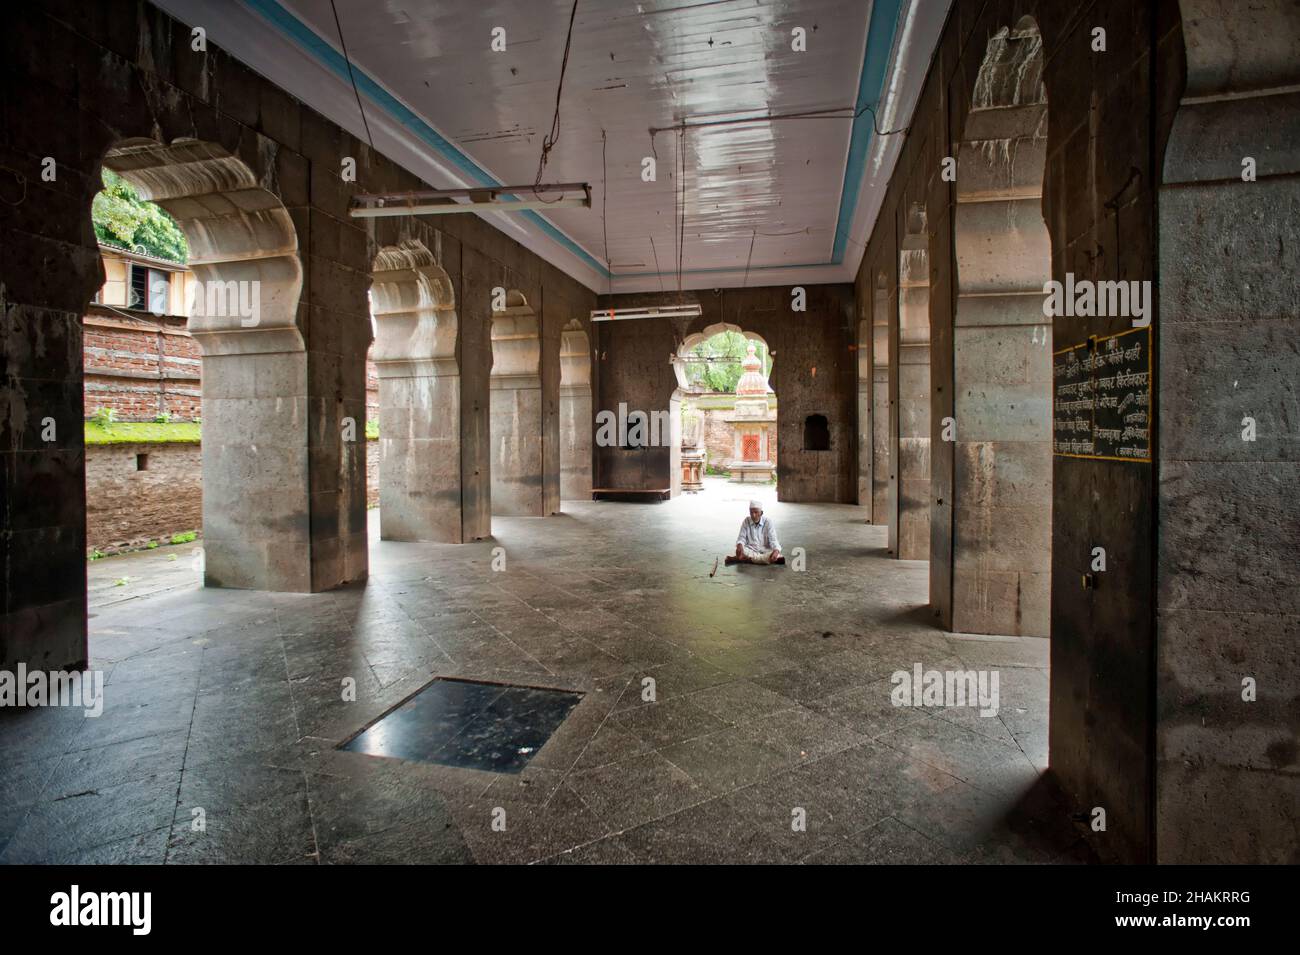 Big and naturally lighted hall and pillars of Shri Vishnu Mandir Hindu temple and a worshiper Stock Photo